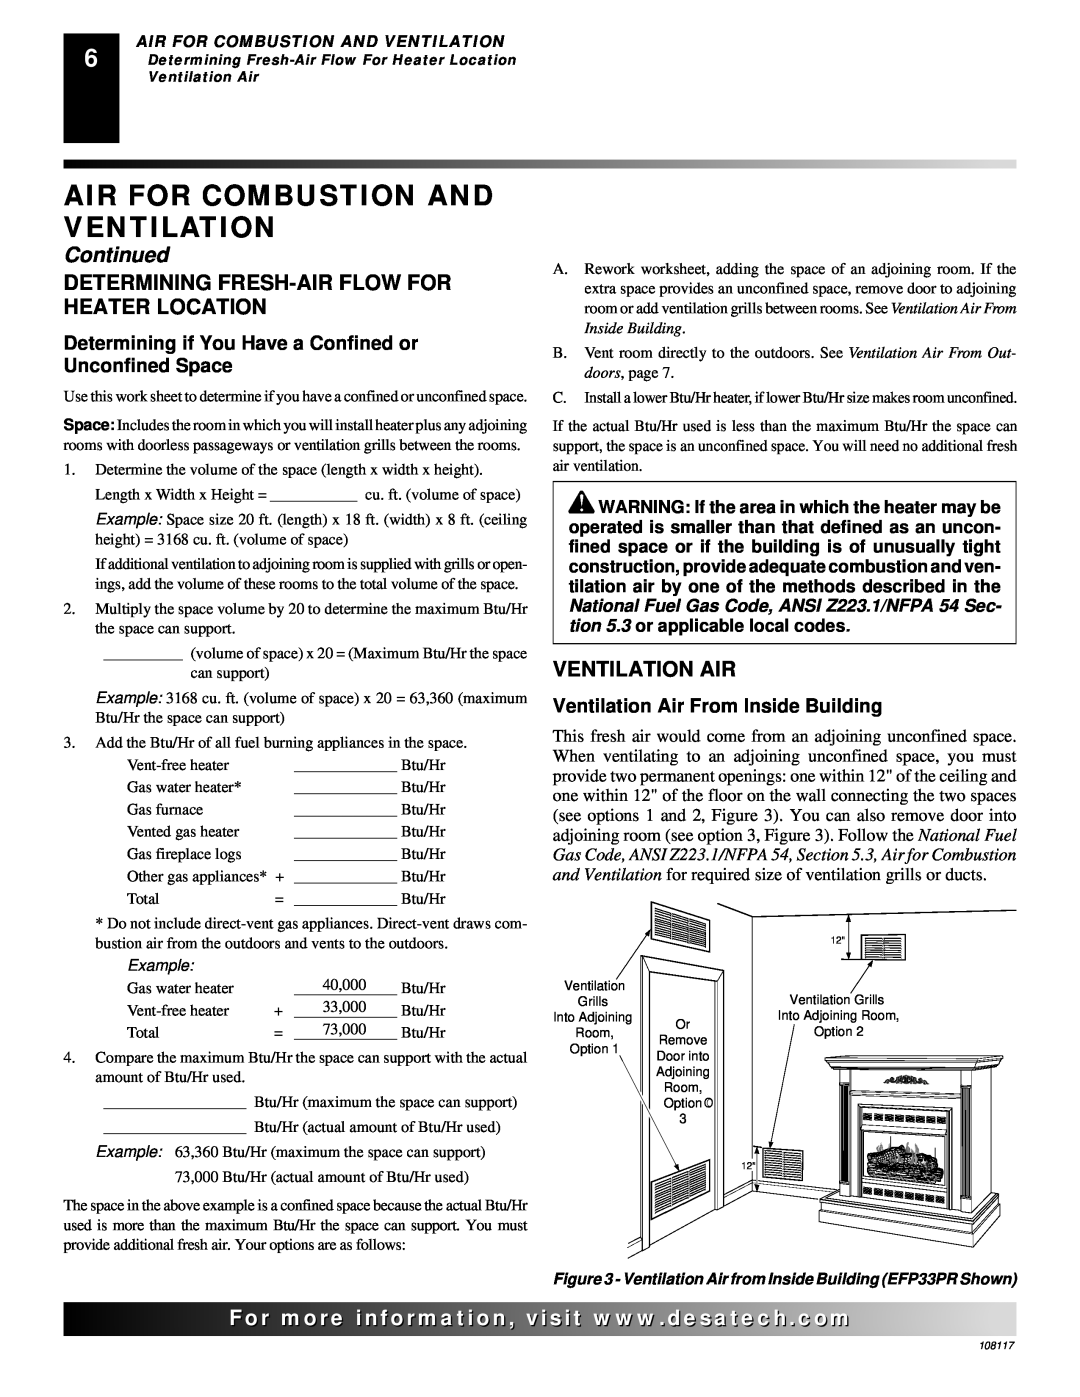 Desa VTGF33NR, VTGF33PR Determining Fresh-Airflow For Heater Location, Ventilation Air, Air For Combustion And Ventilation 